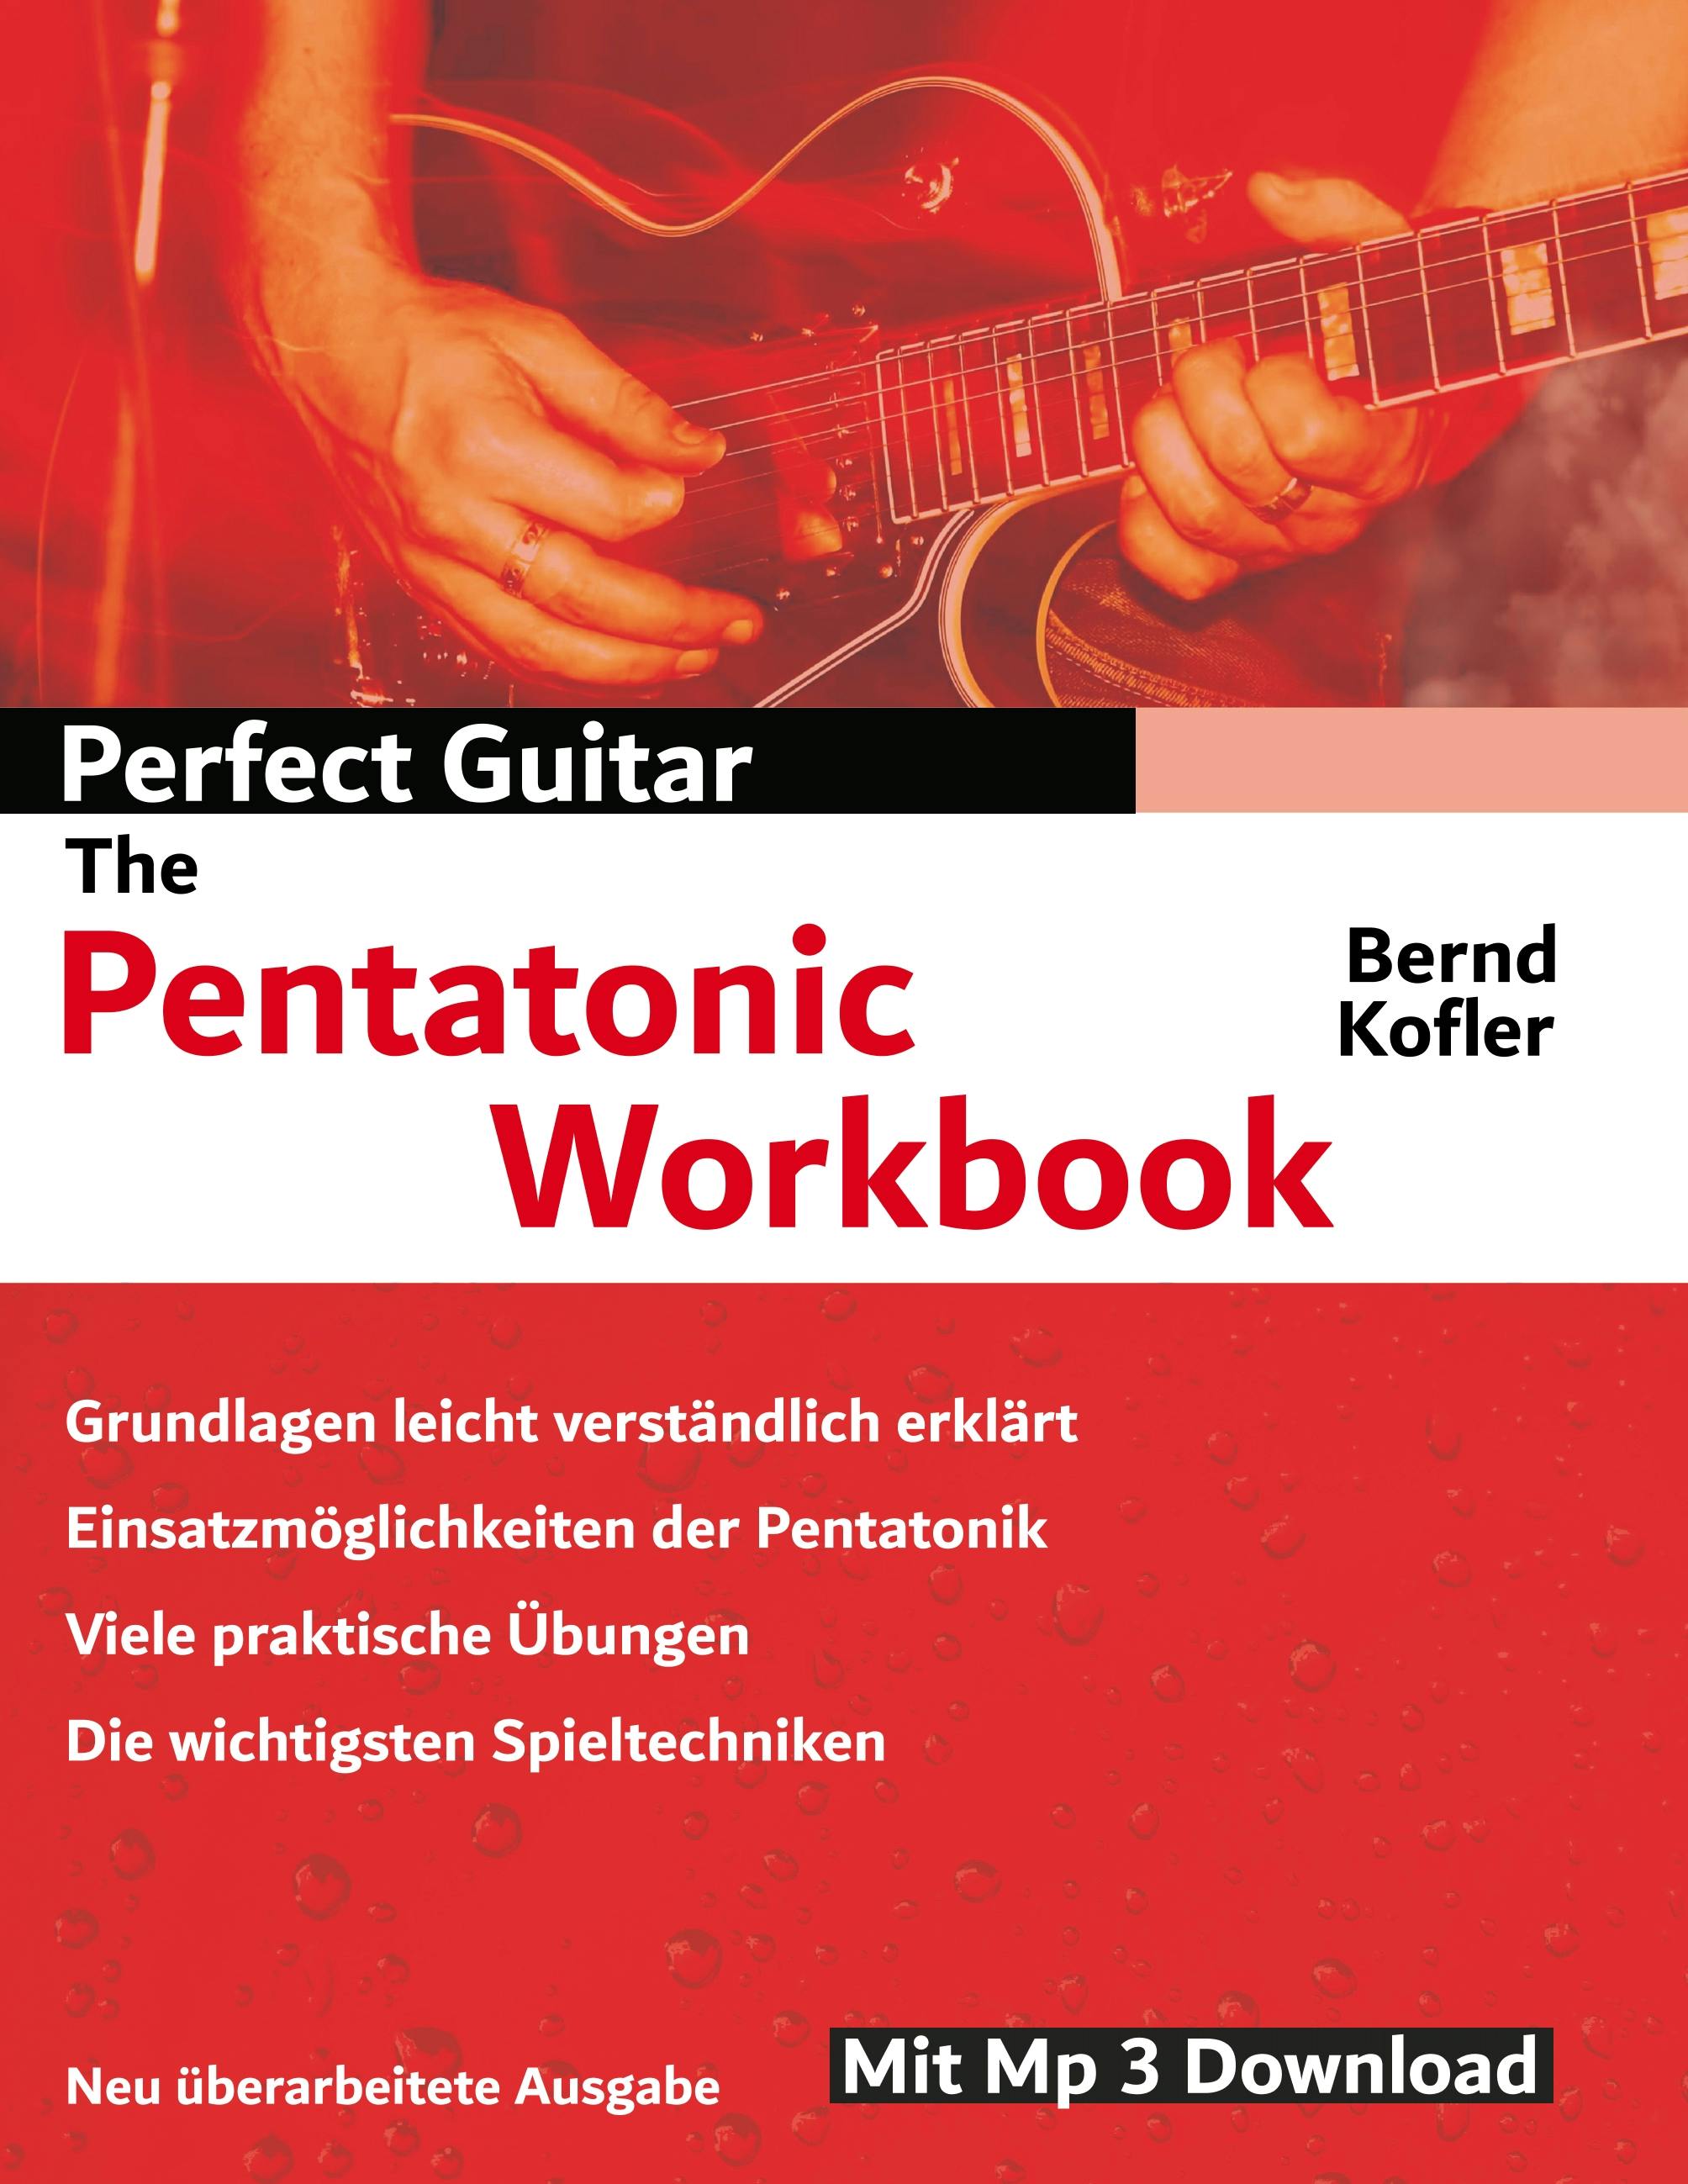 Perfect Guitar - The Pentatonic Workbook - Bernd Kofler